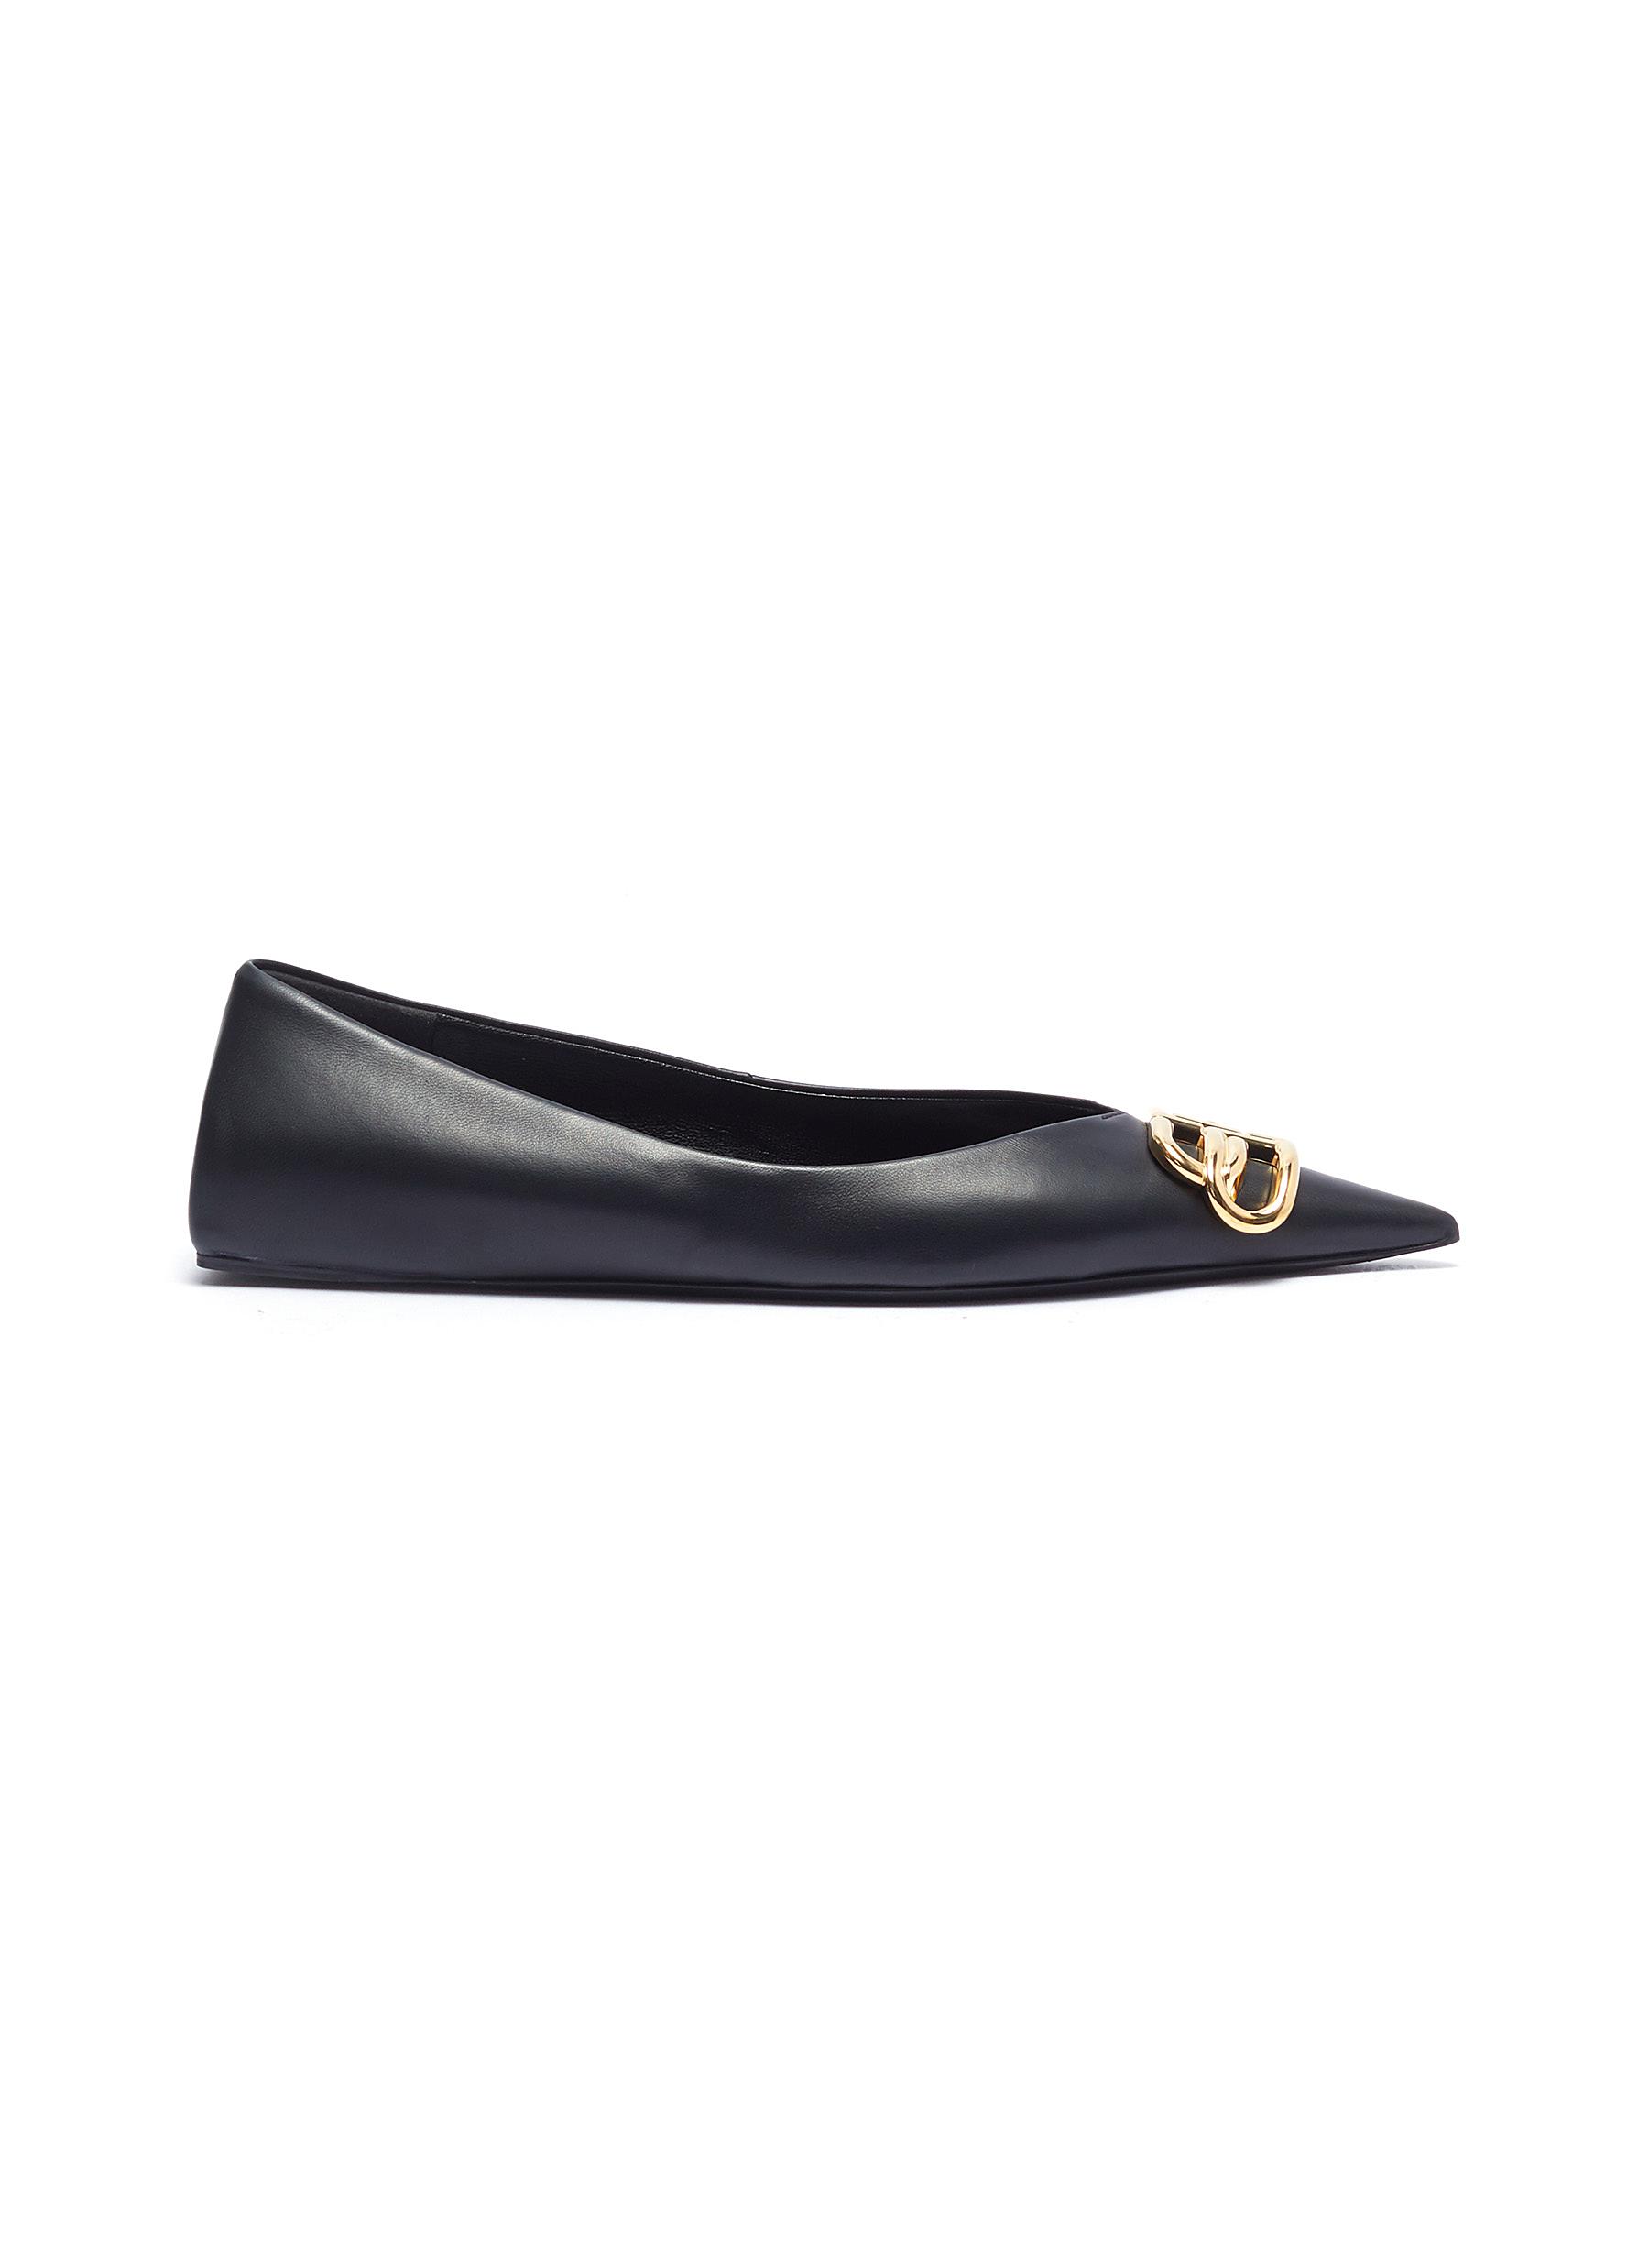 Balenciaga Women039s Ankle Boots Black Leather Ankle Strap Flat Euro  385  eBay